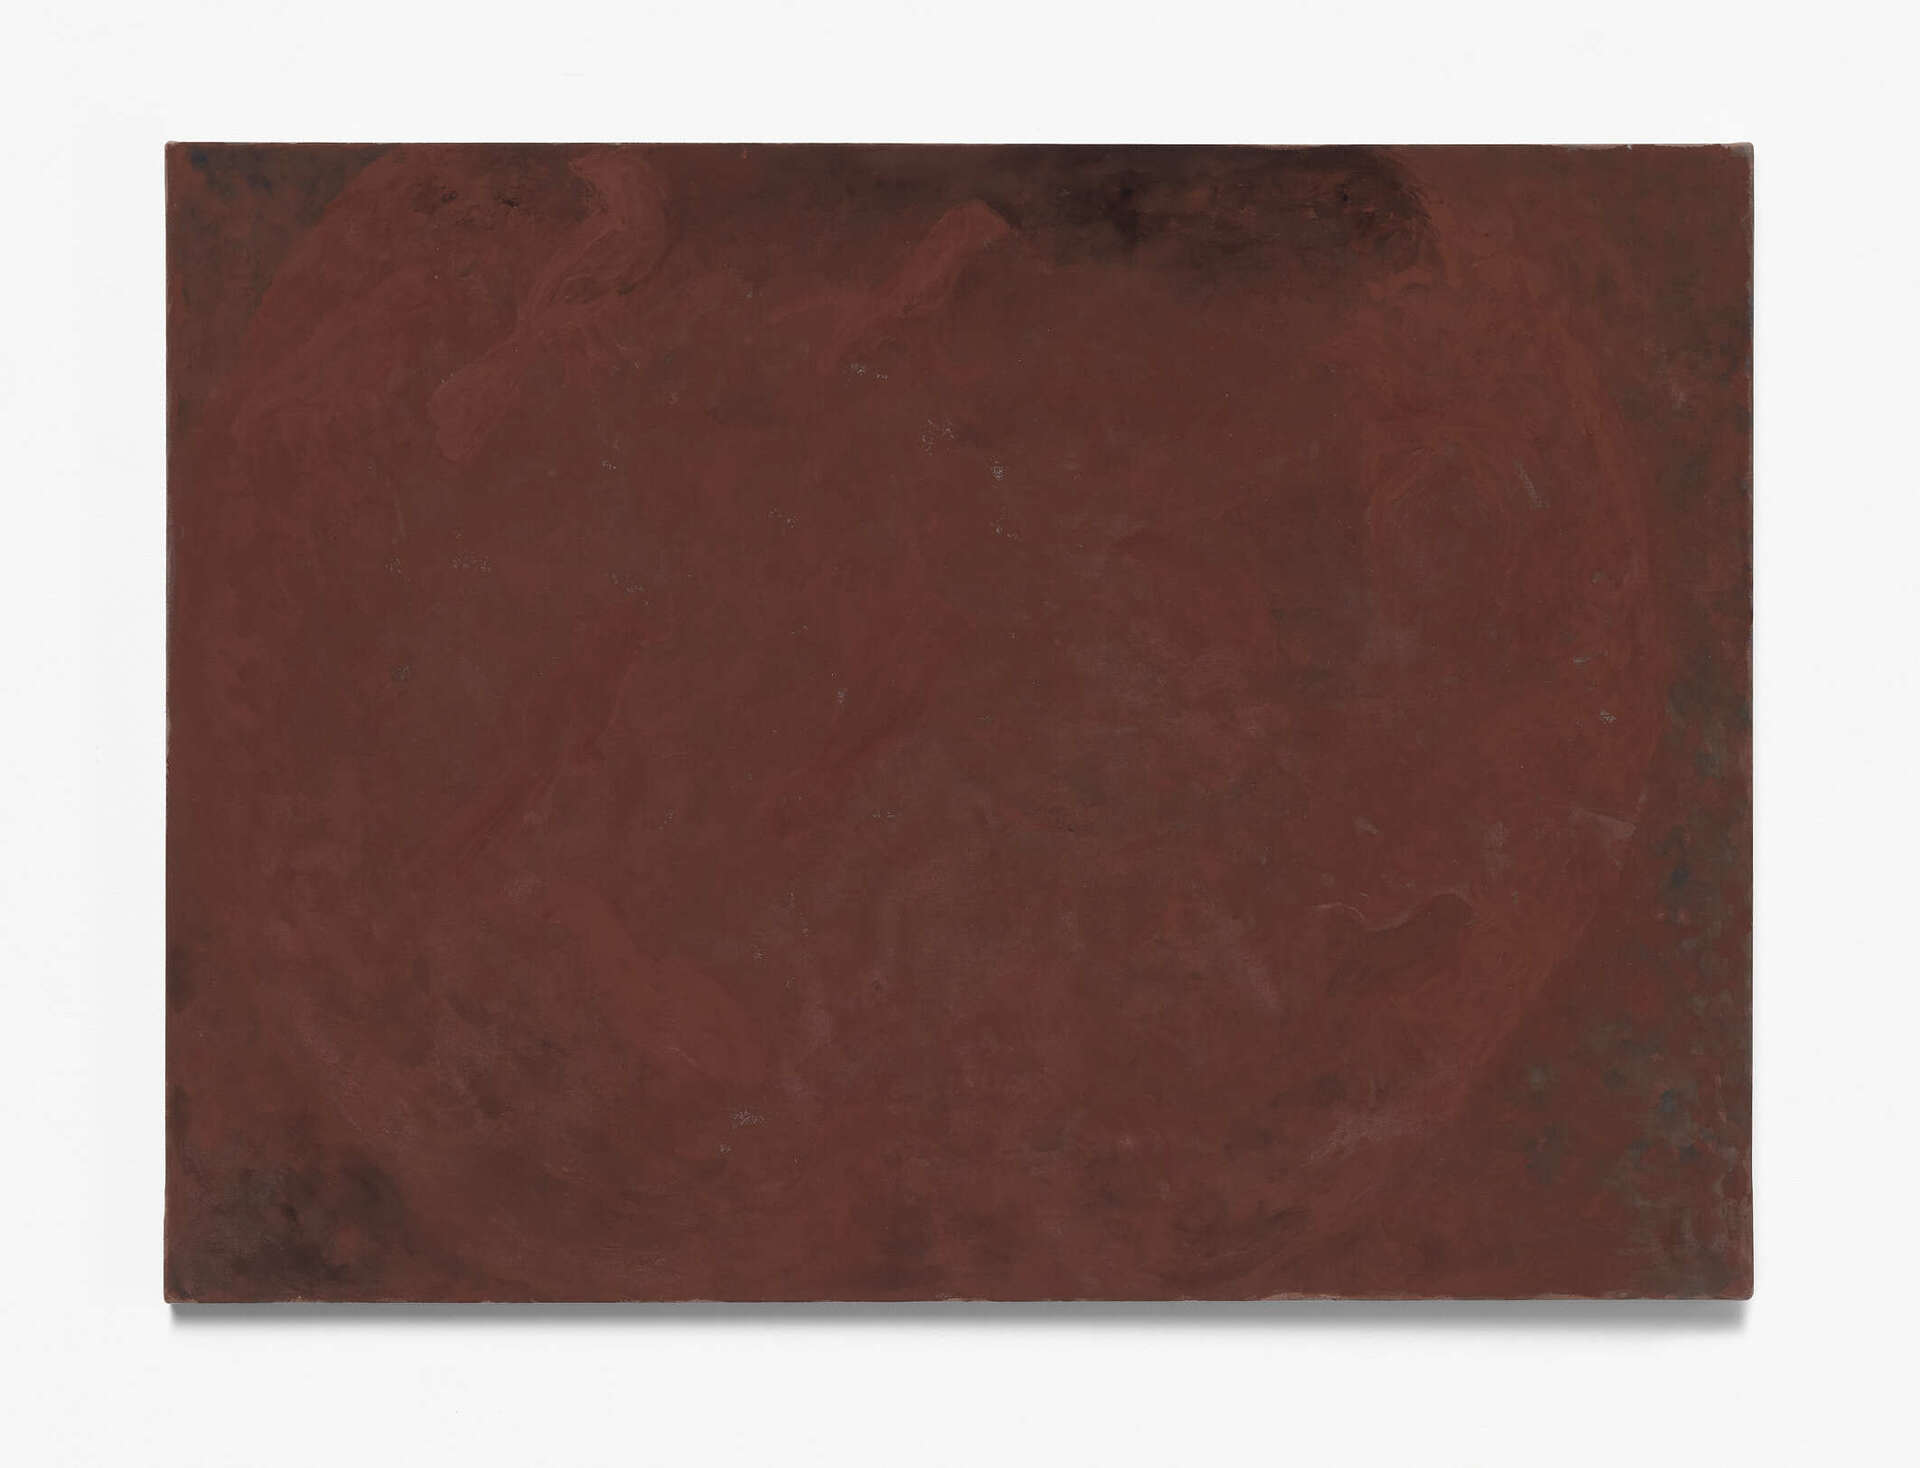 Allan Rand, Mudworks (untitled no. 5), 2021, Acrylic, gesso, chalk pastel on cotton, 76 x 55.4 x 1.8 cm.